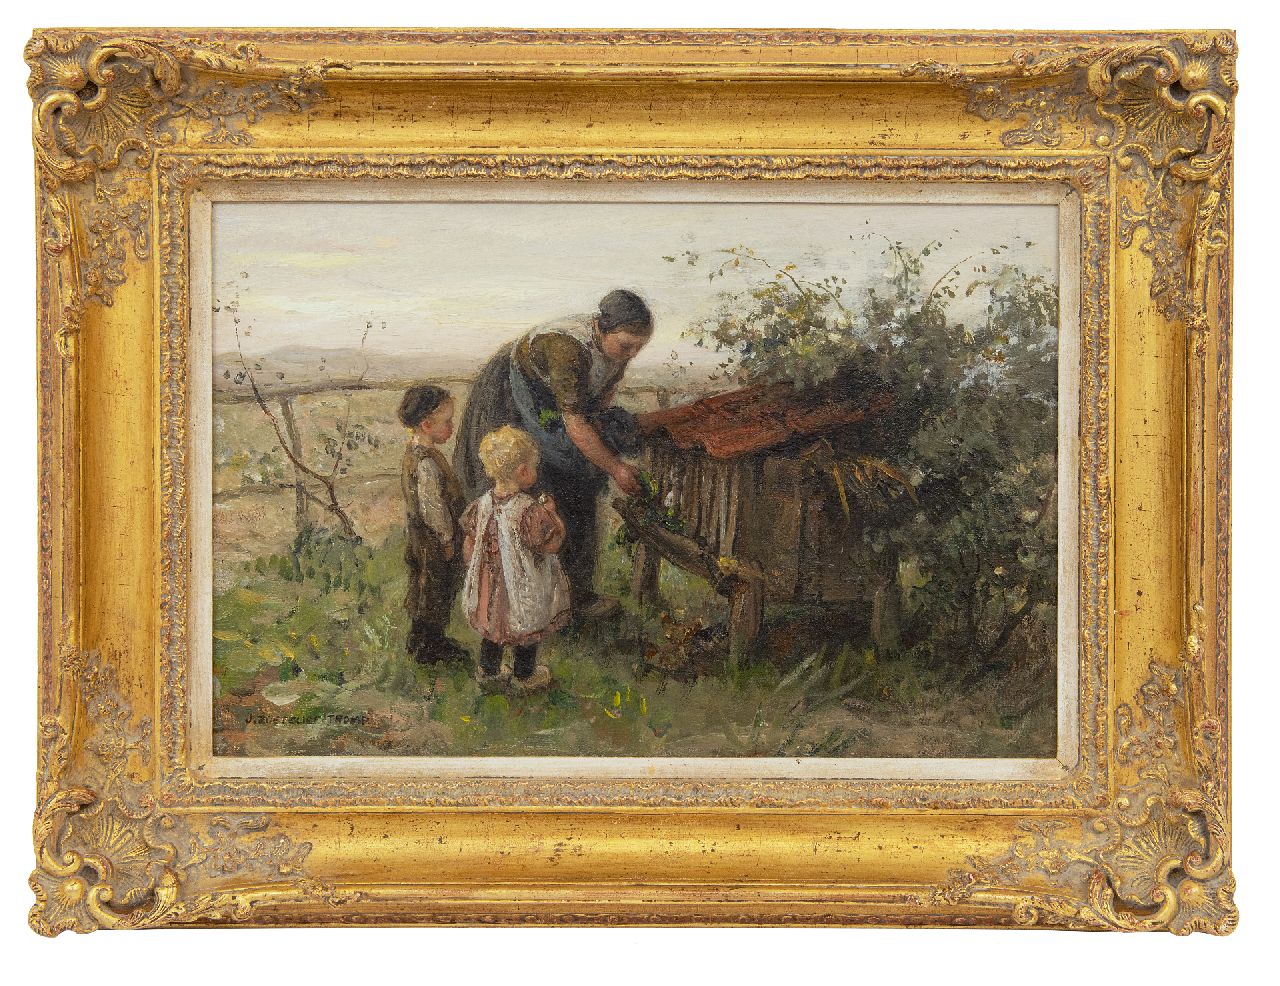 Zoetelief Tromp J.  | Johannes 'Jan' Zoetelief Tromp | Paintings offered for sale | Feeding the rabbit, oil on canvas 27.1 x 40.4 cm, signed l.l.